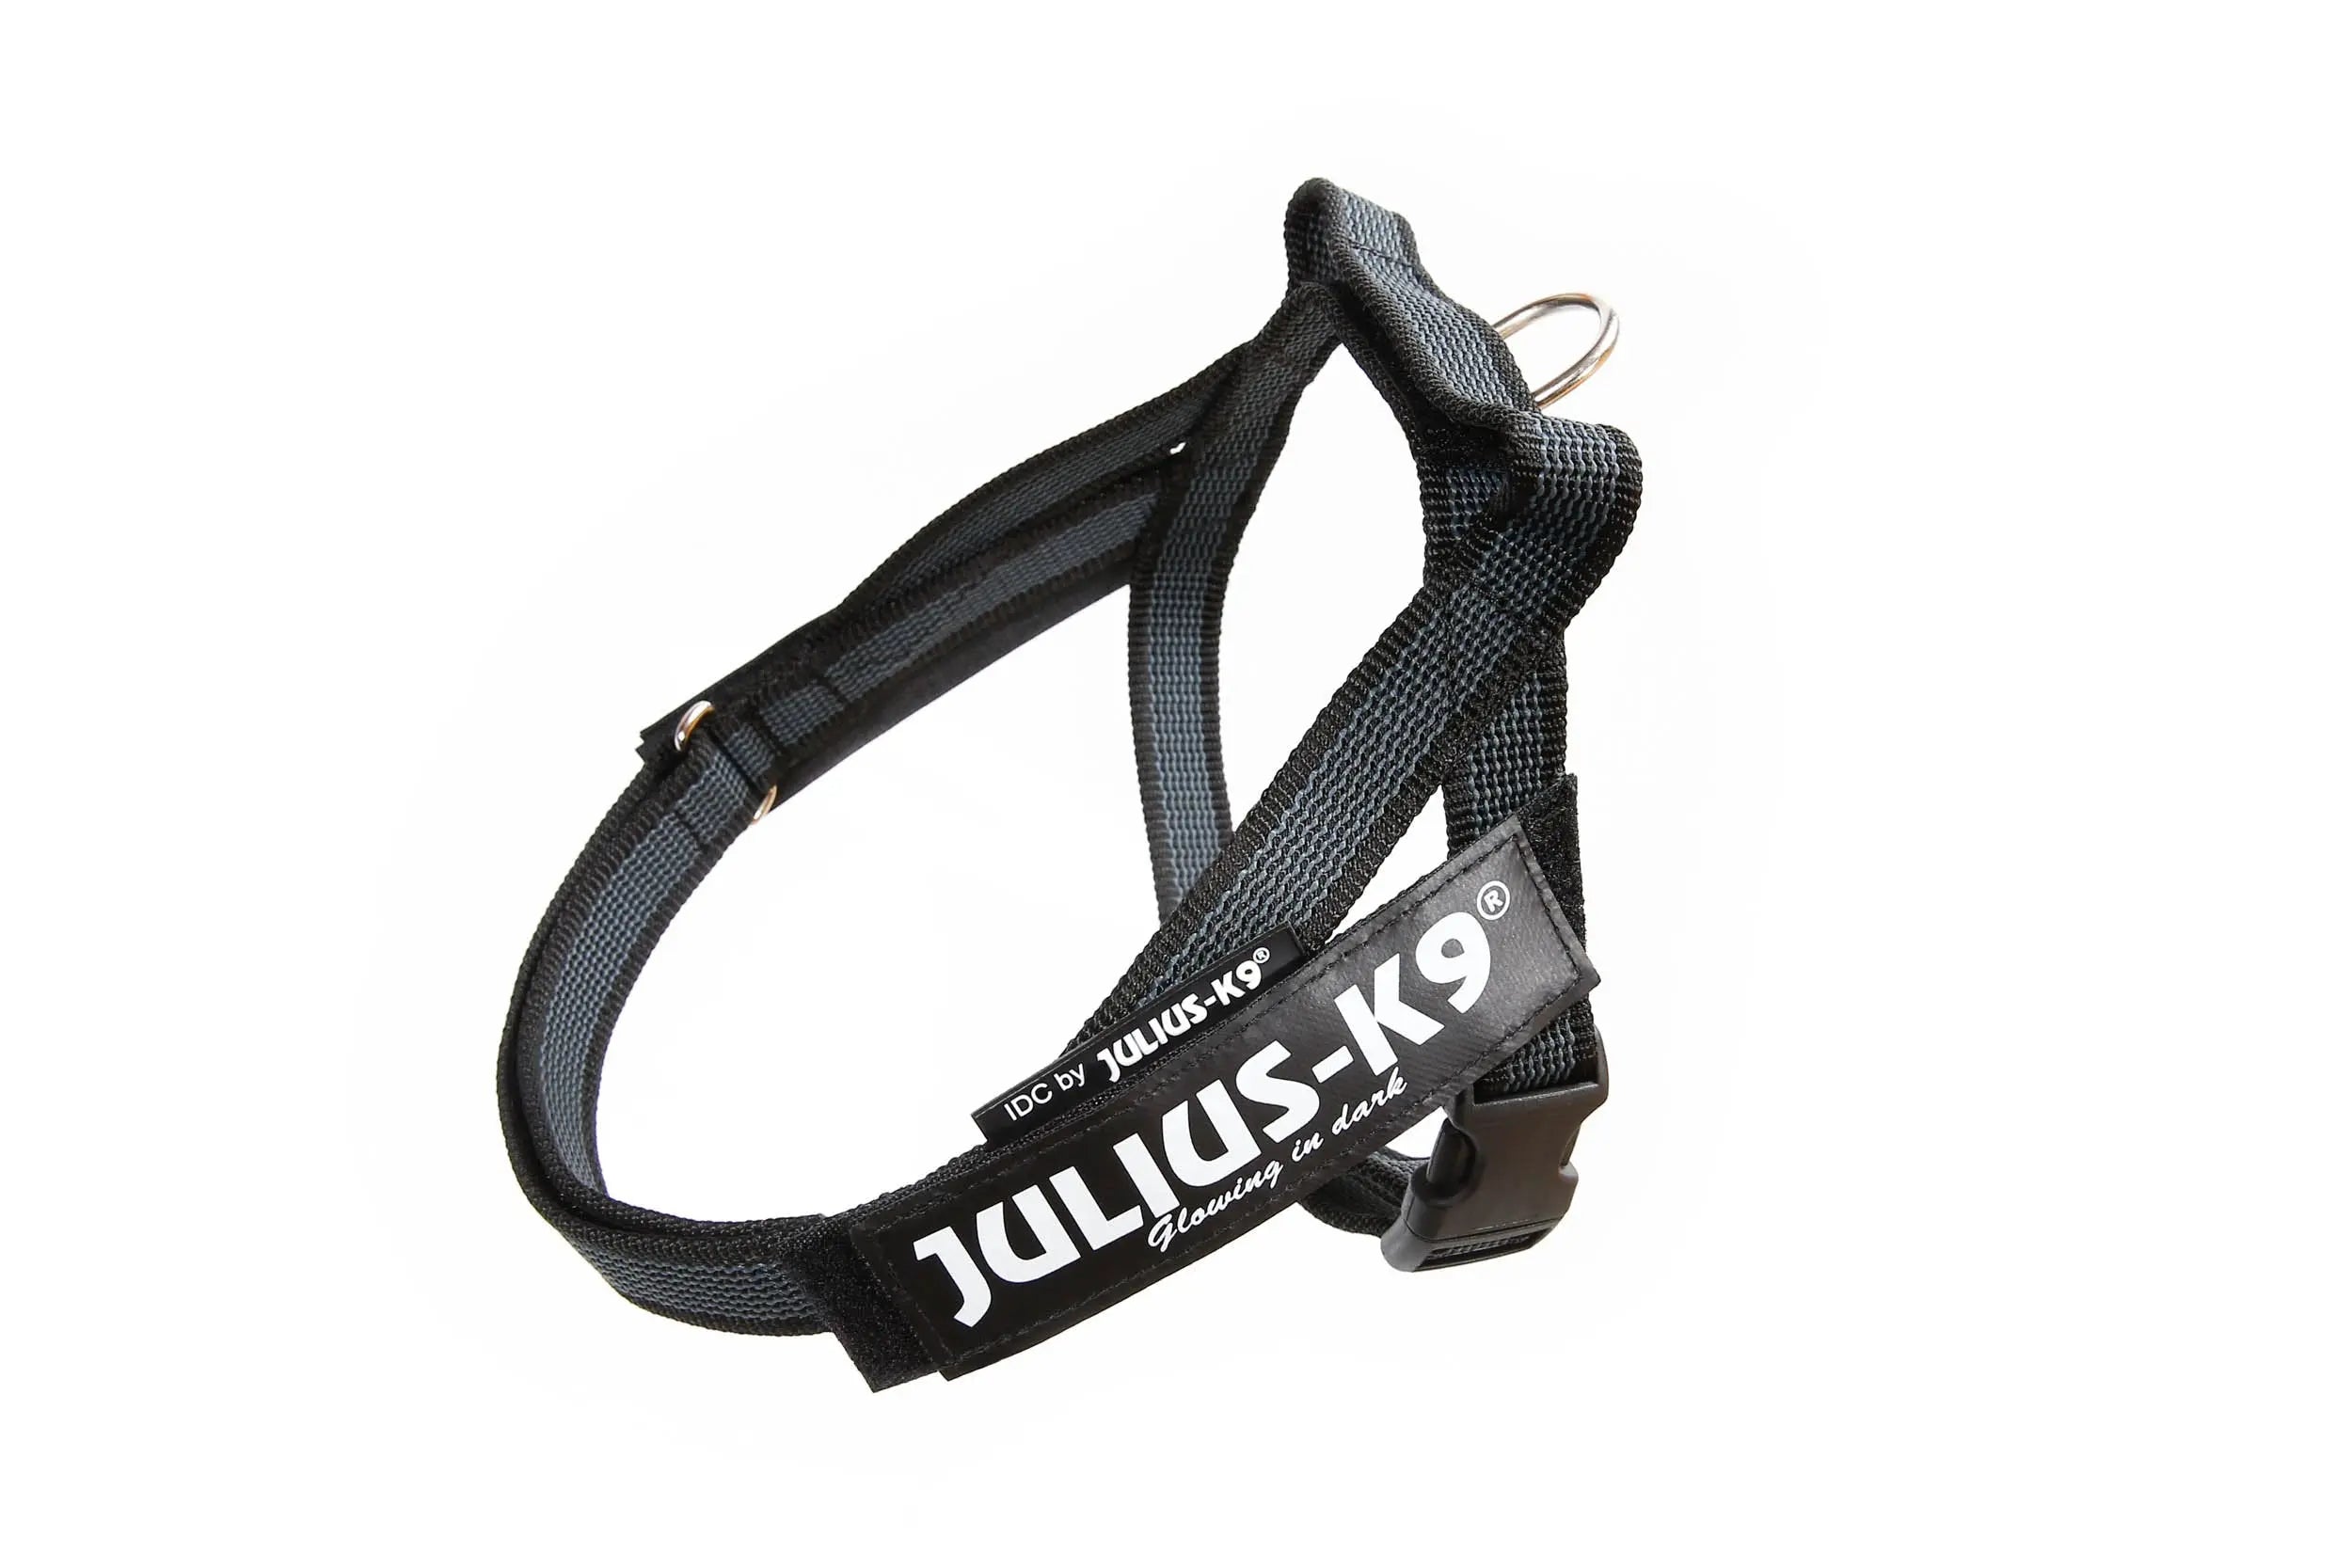 Julius-K9 Mantrailing Harness Review